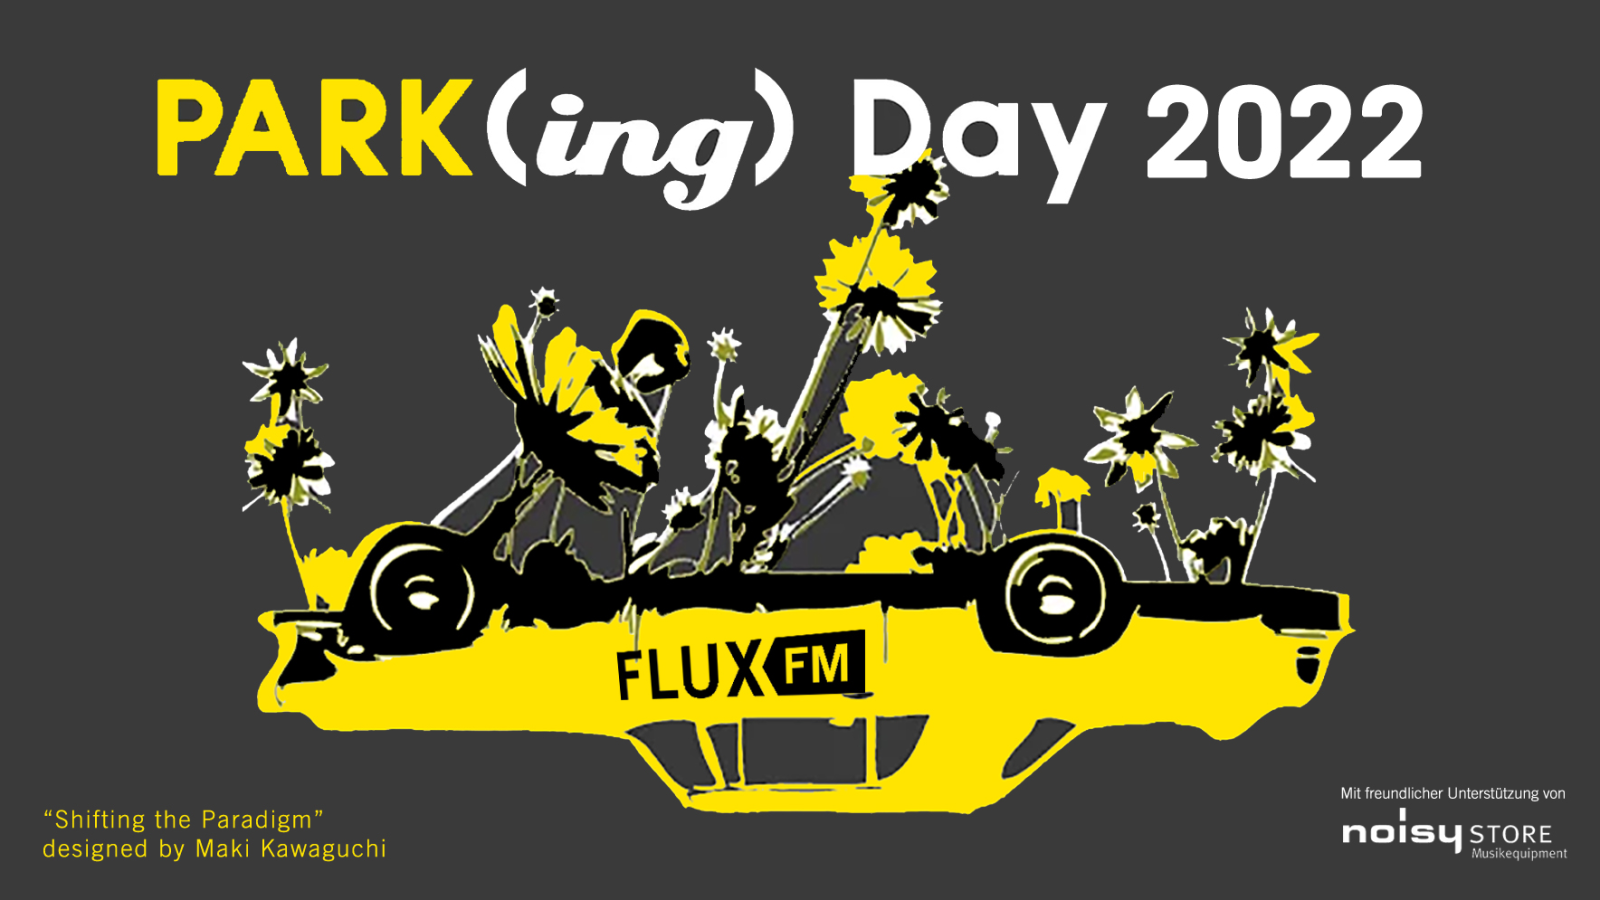 FluxFM x PARKingDay 2022 am 16. September